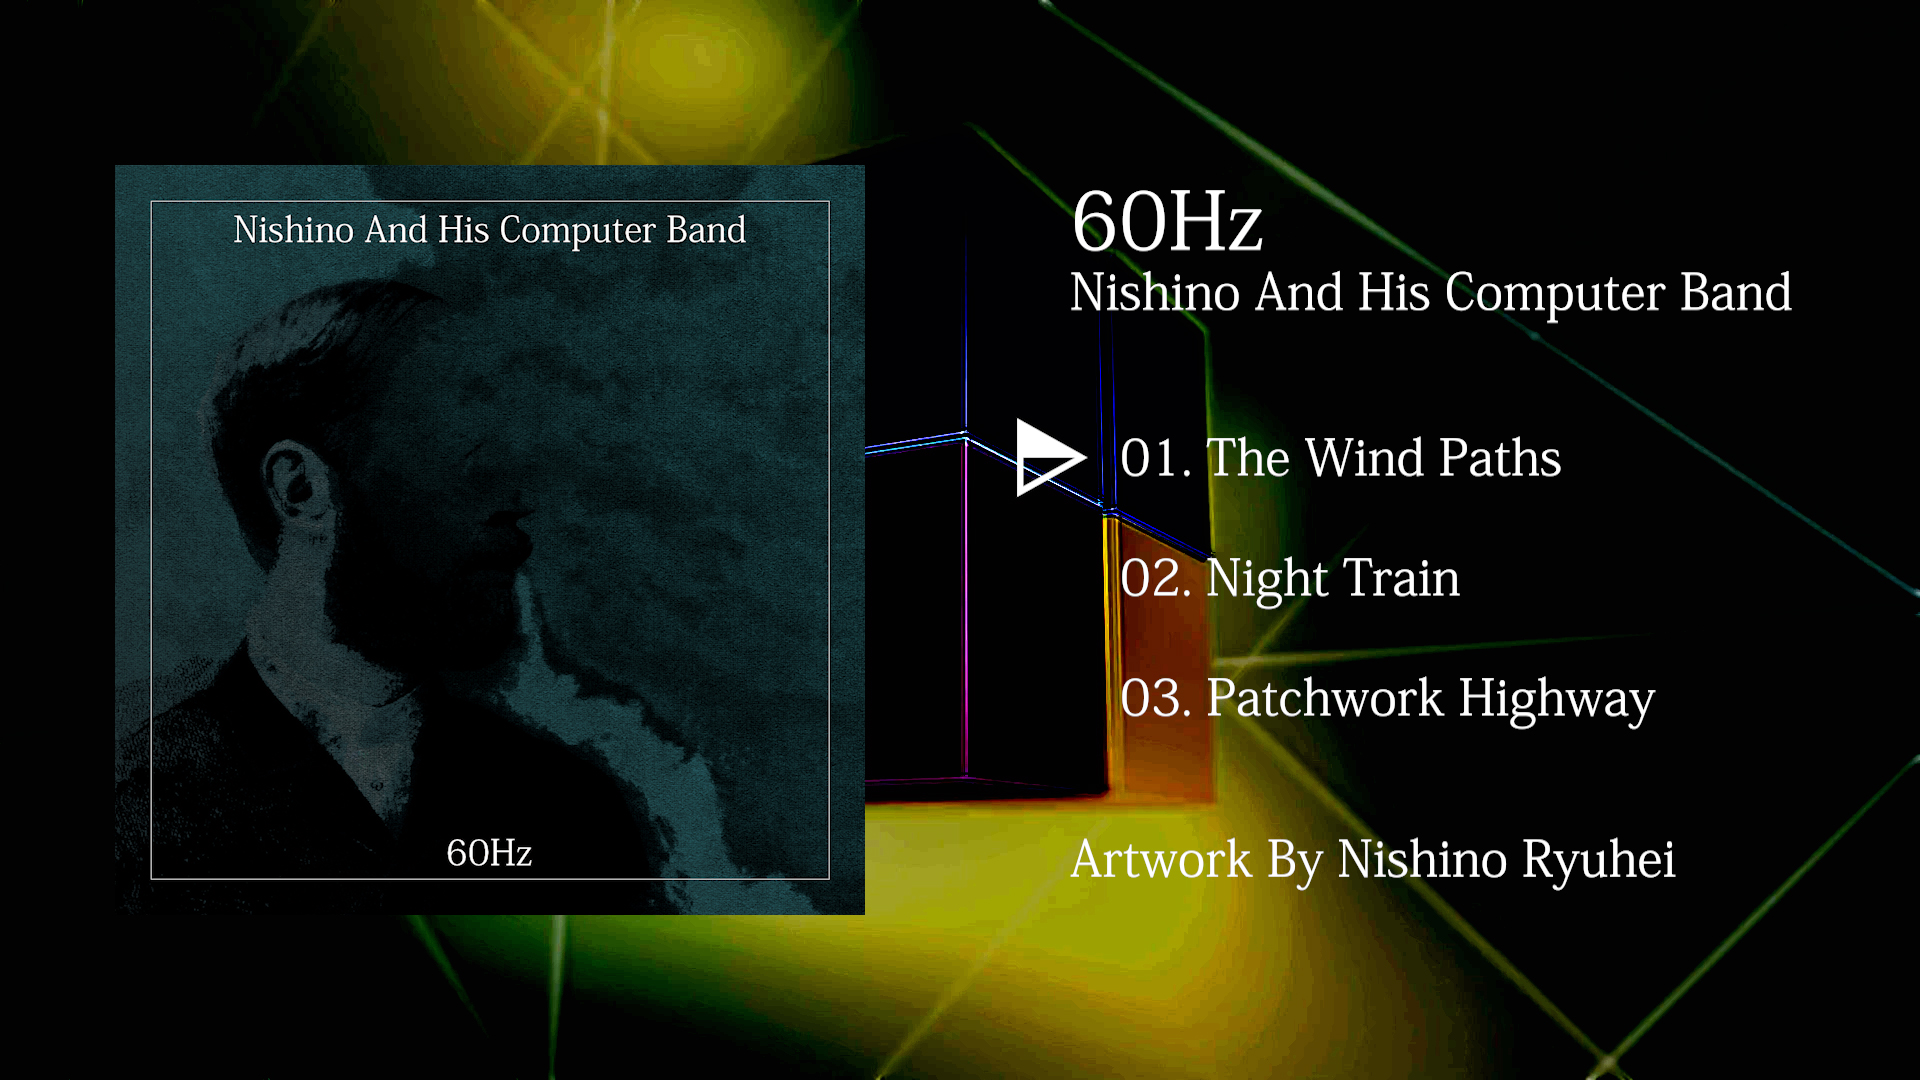 Nishino And His Computer Bandの1stアルバム「60Hz」のサムネイル画像